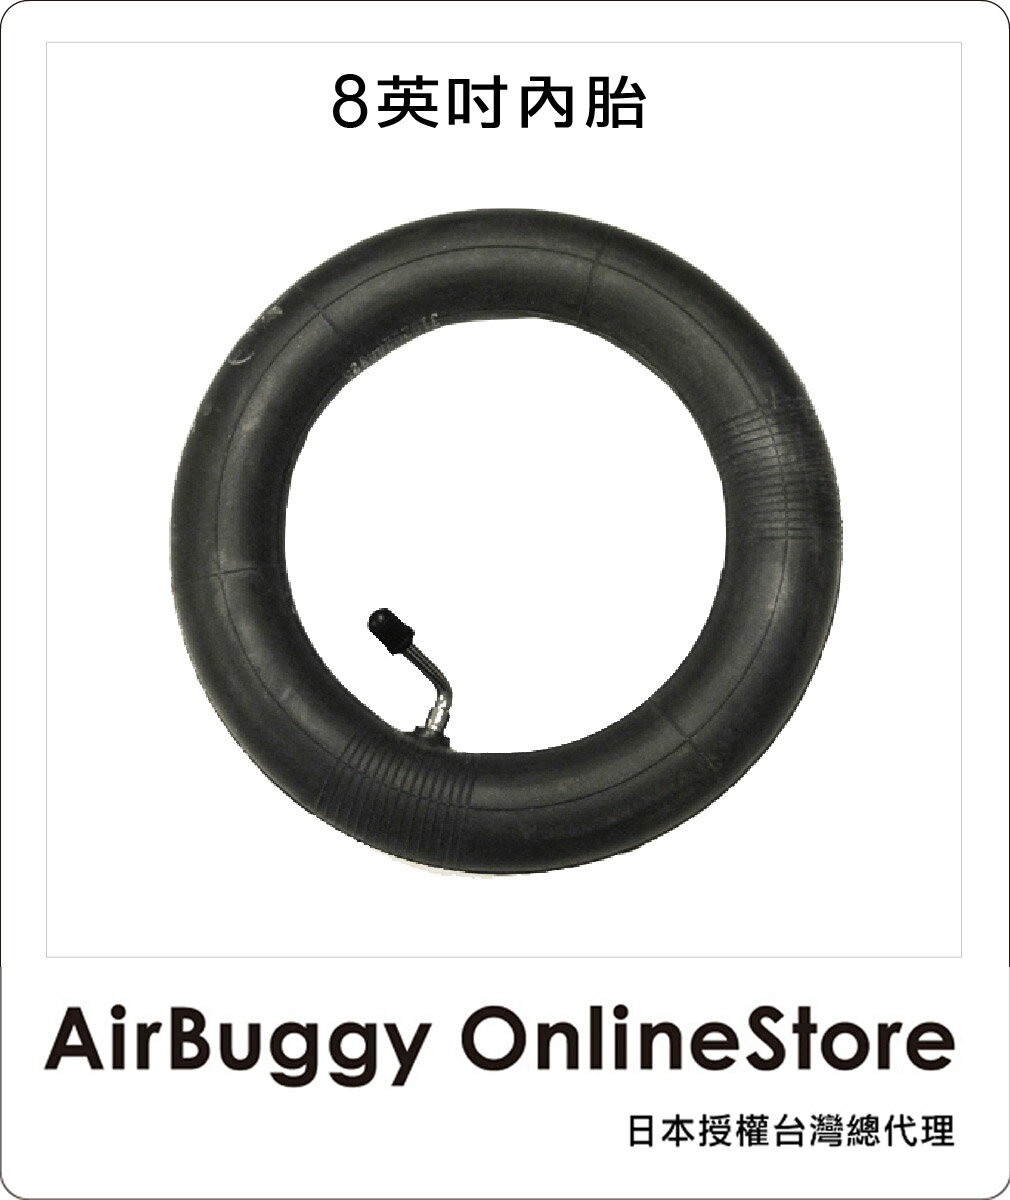 AirBuggy 8英吋內胎(Coco,Safari,Twinkle) 0